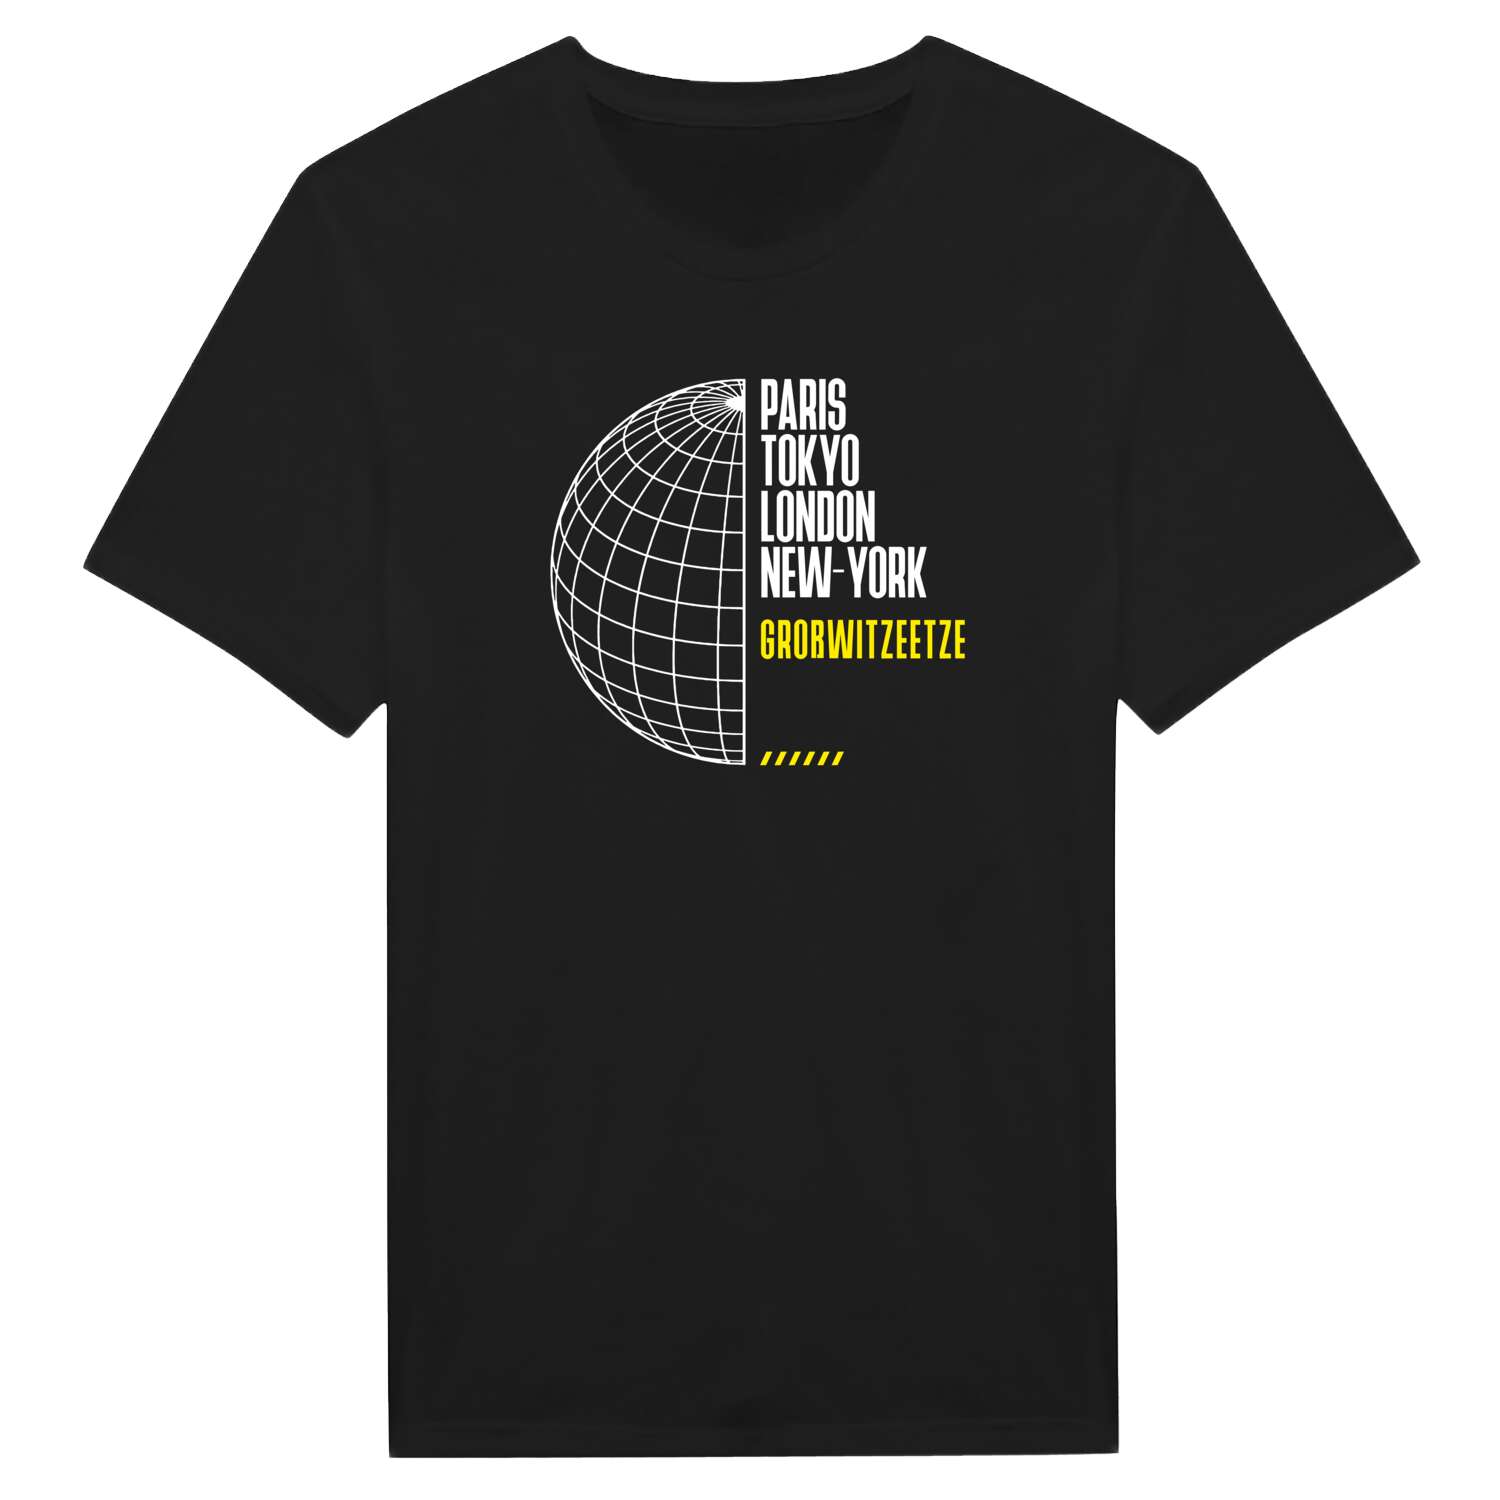 Großwitzeetze T-Shirt »Paris Tokyo London«